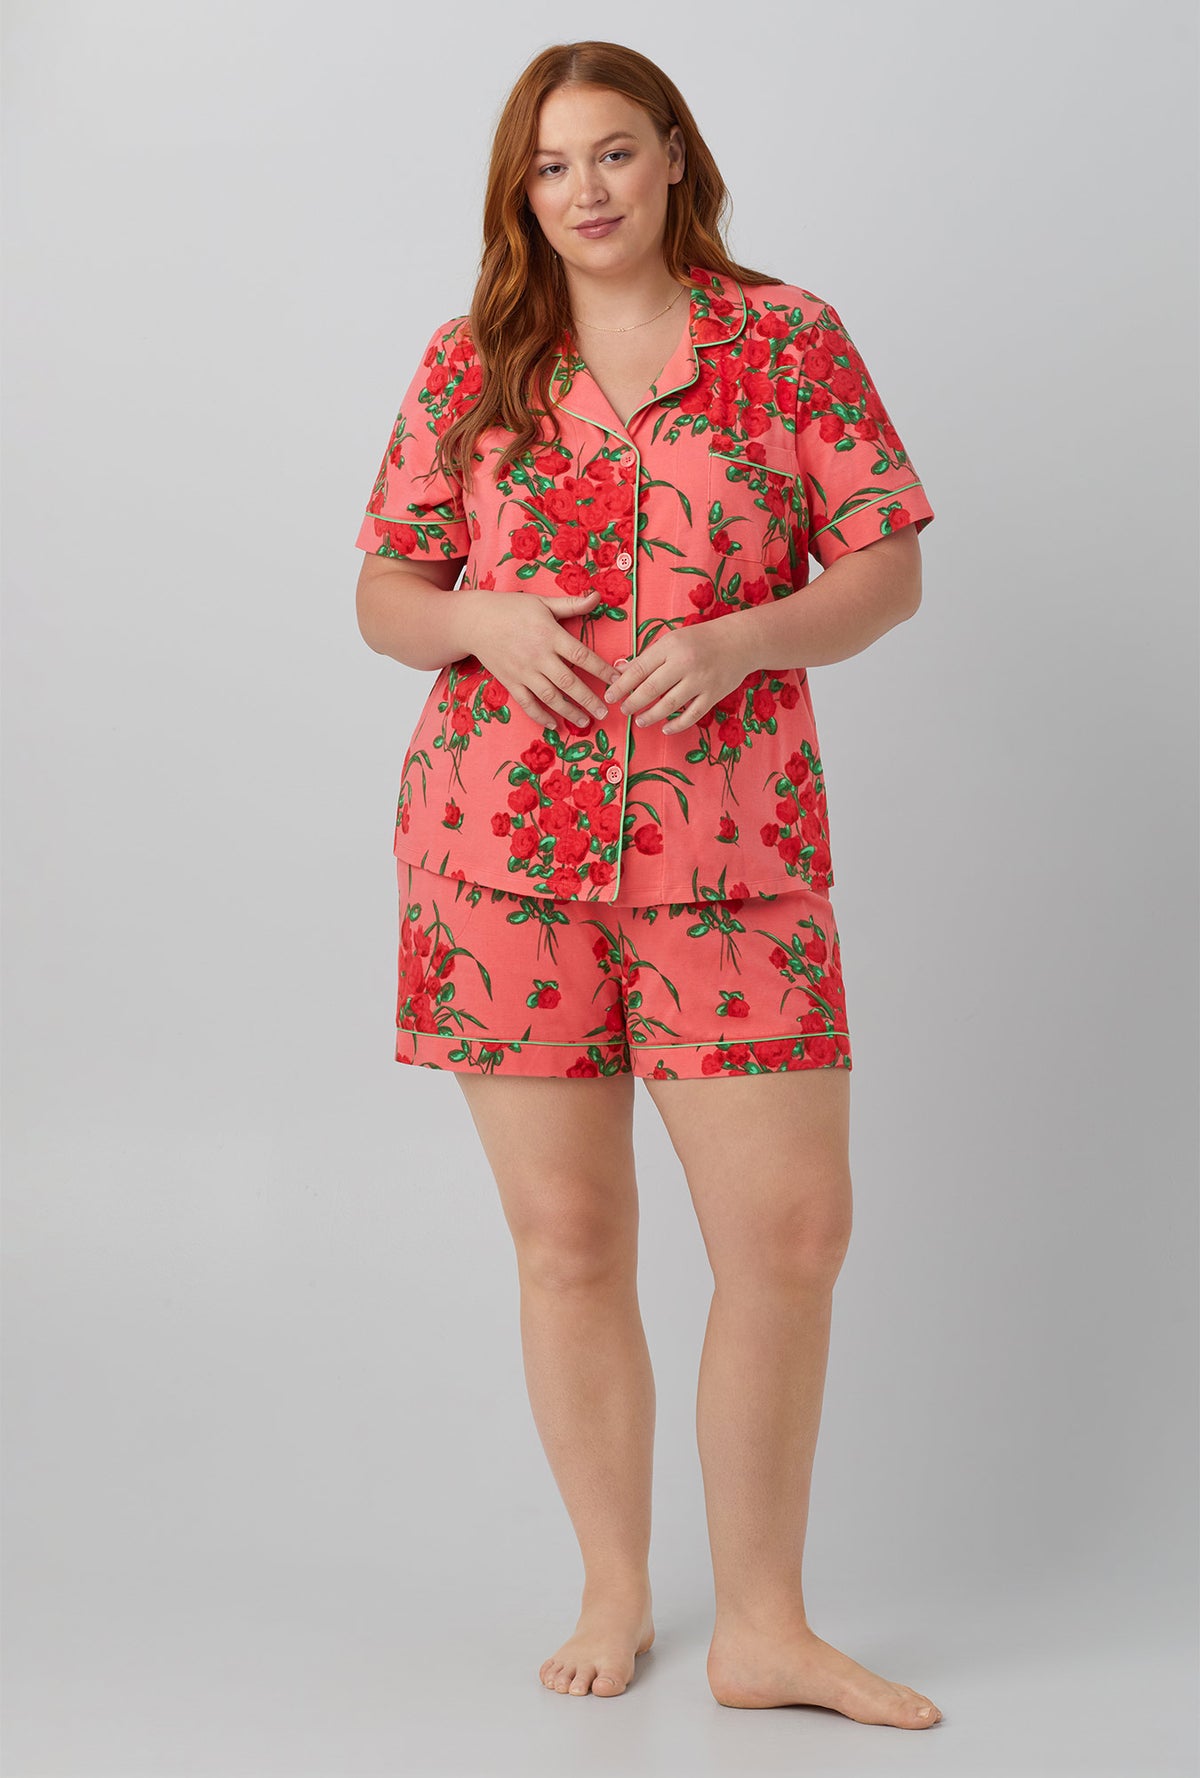 A lady wearing By The Dozen Short Sleeve Classic Shorty Stretch Jersey PJ Set